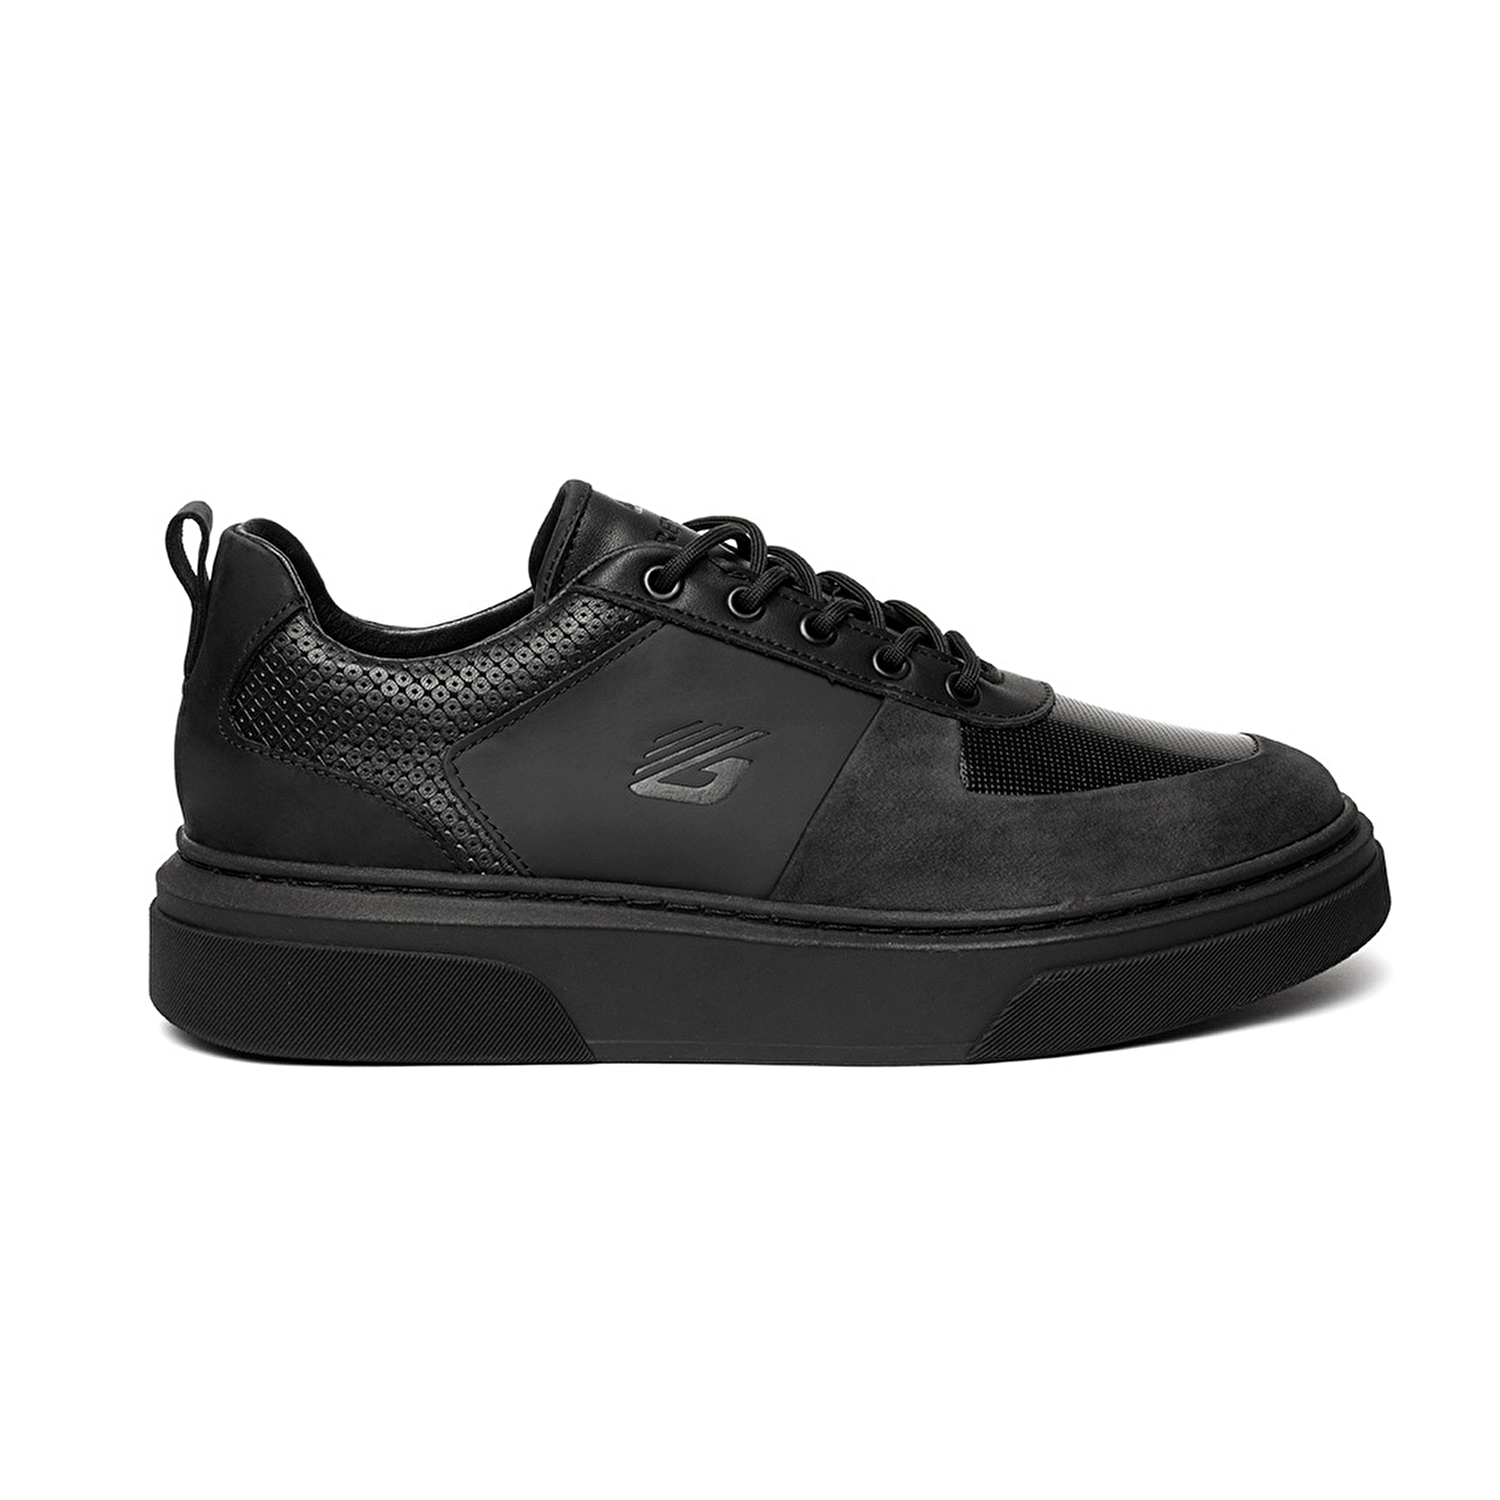 Erkek Siyah Hakiki Deri Sneaker Ayakkabı 3K1SA16410-1